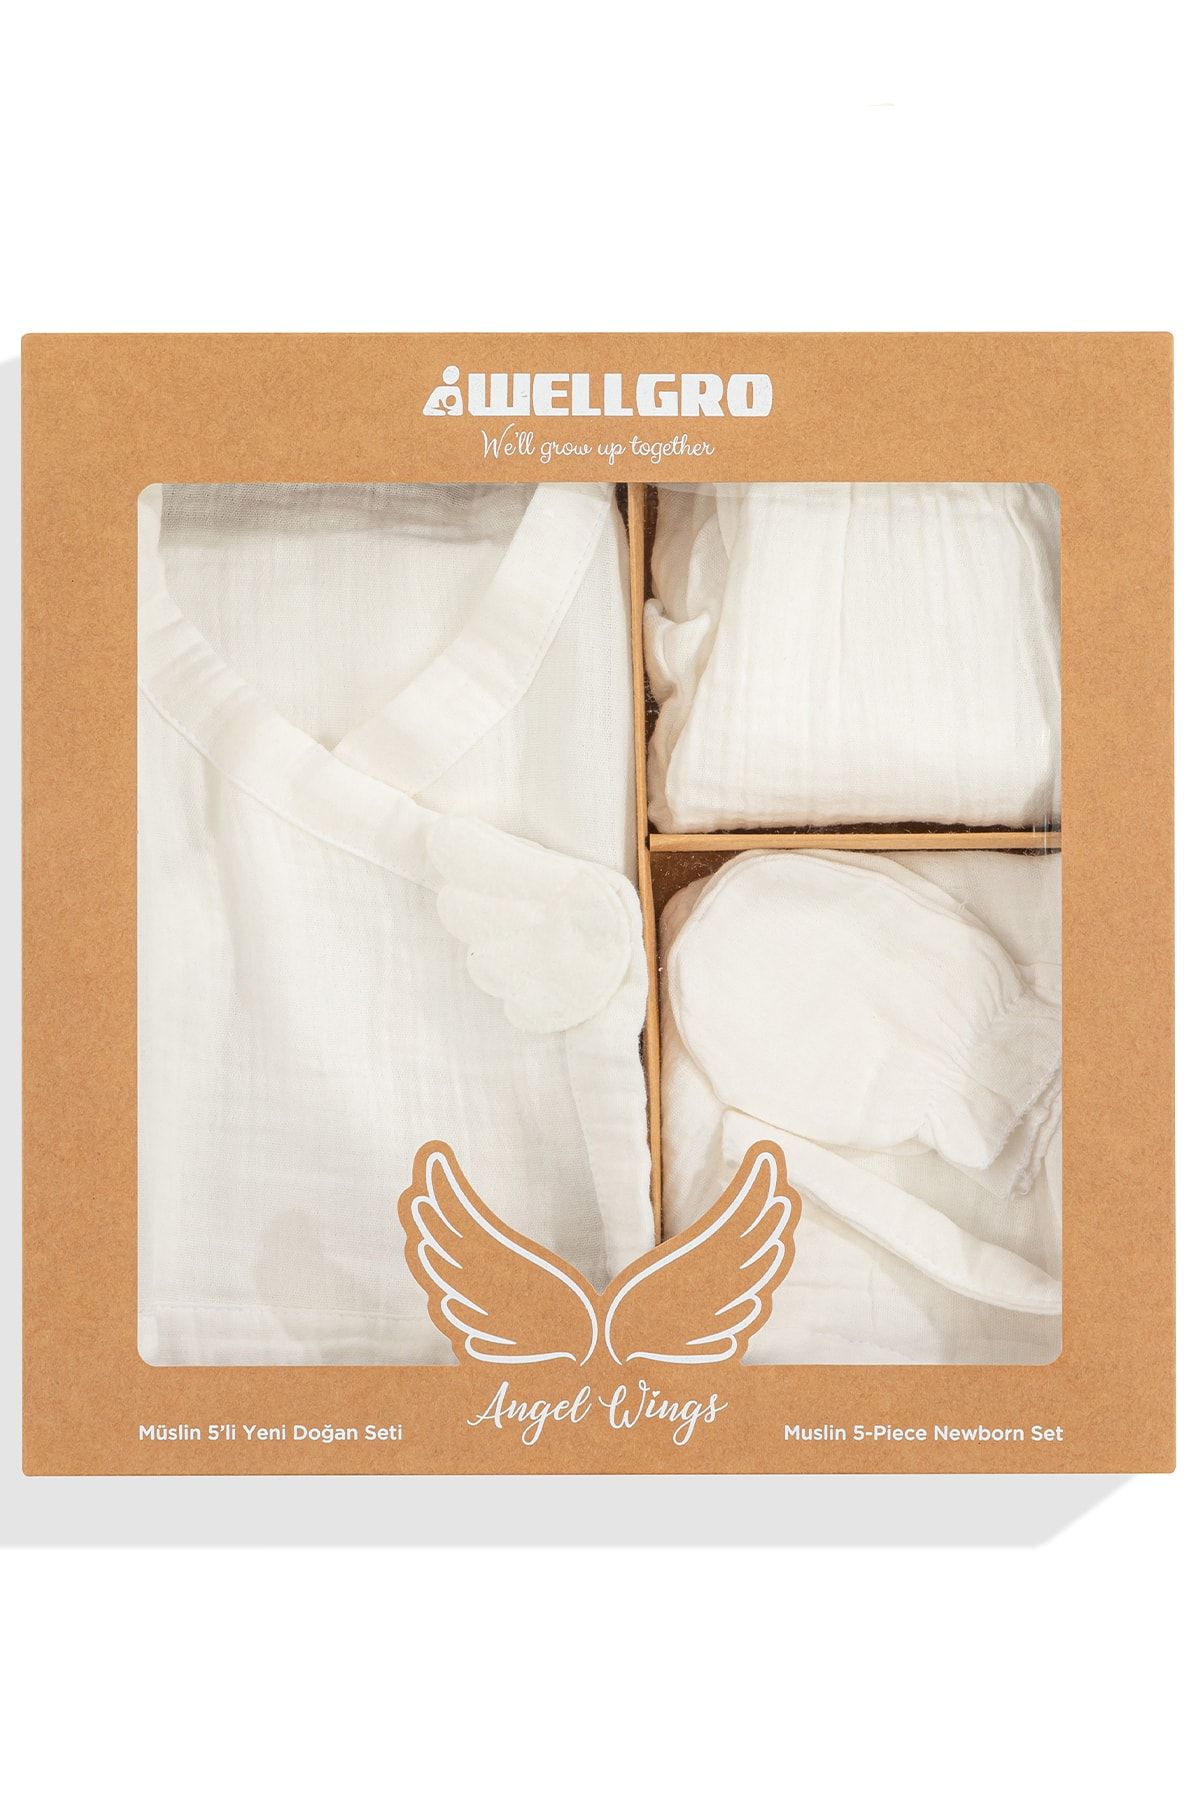 Wellgro Angel Wings Müslin 5 Li Yeni Doğan Seti -Beyaz